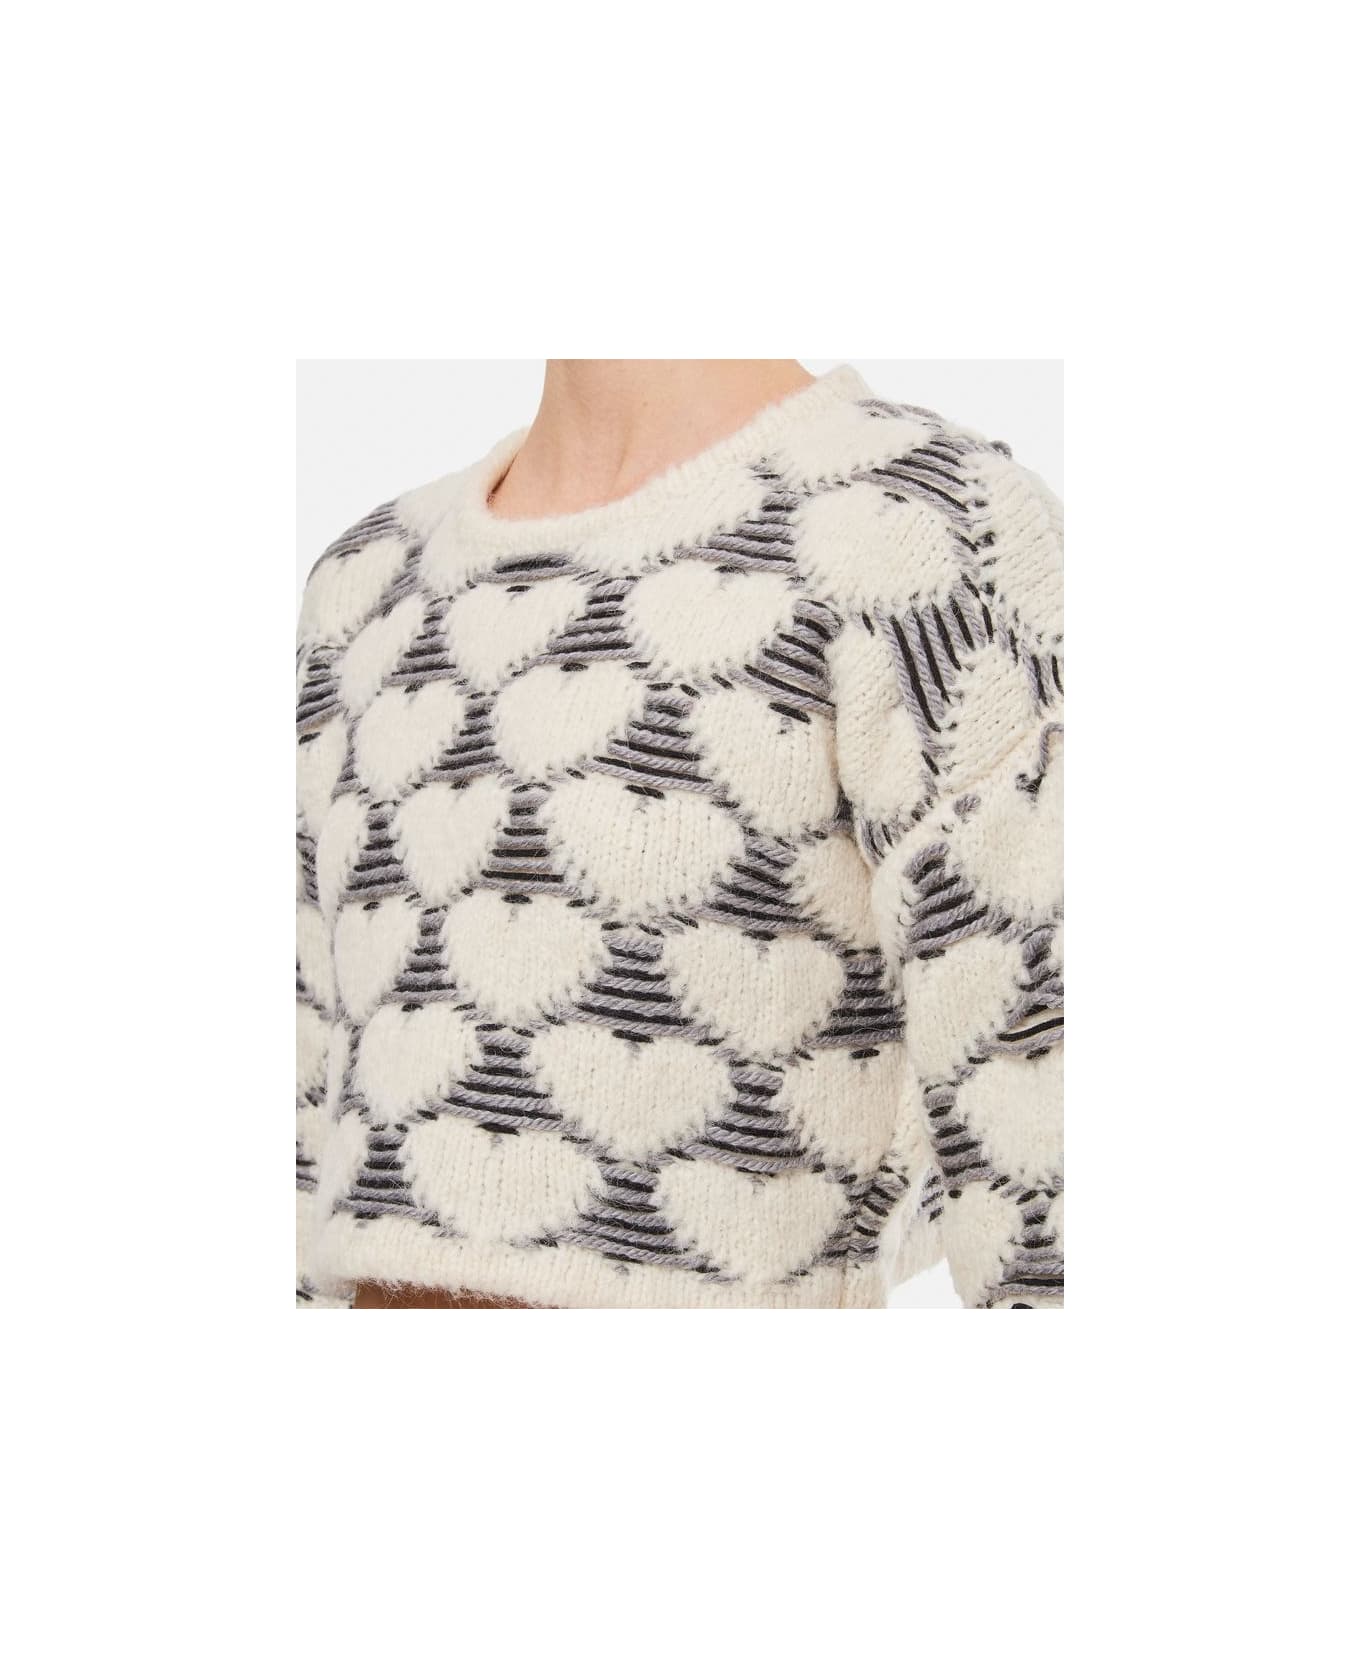 Marco Rambaldi Floating Heart Knitted Sweater - White